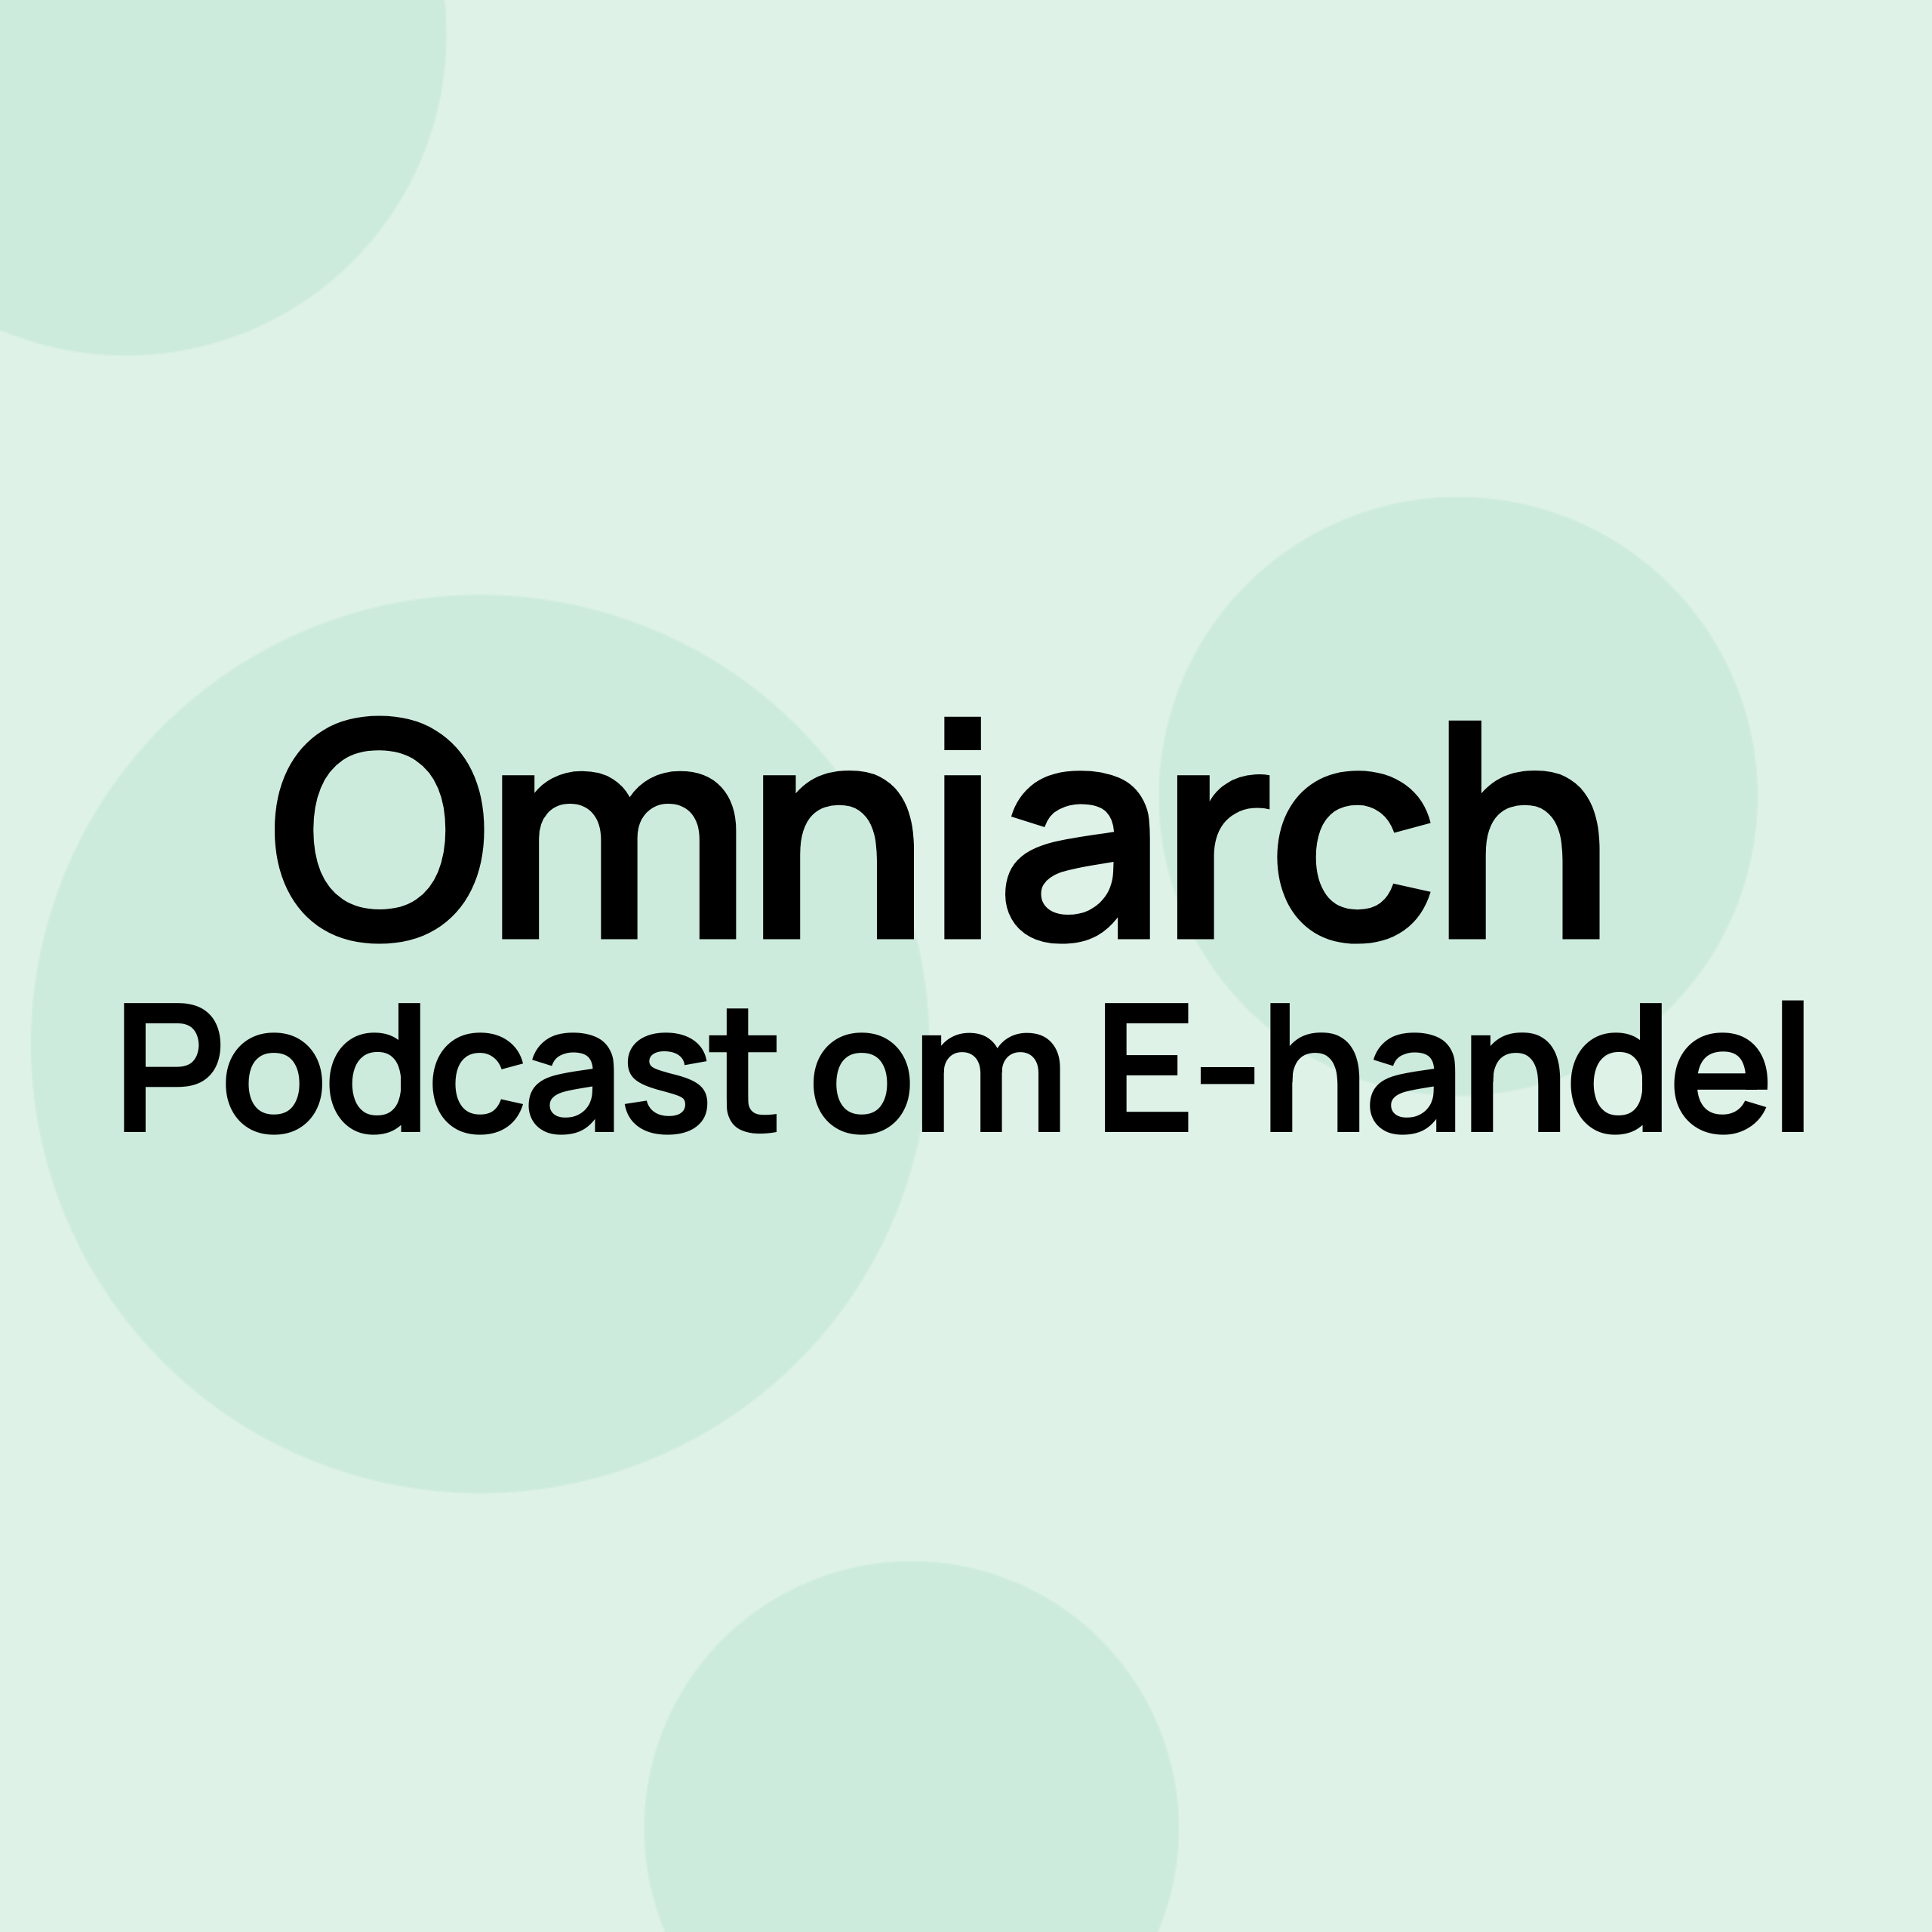 Omniarch Podcast om E-handel